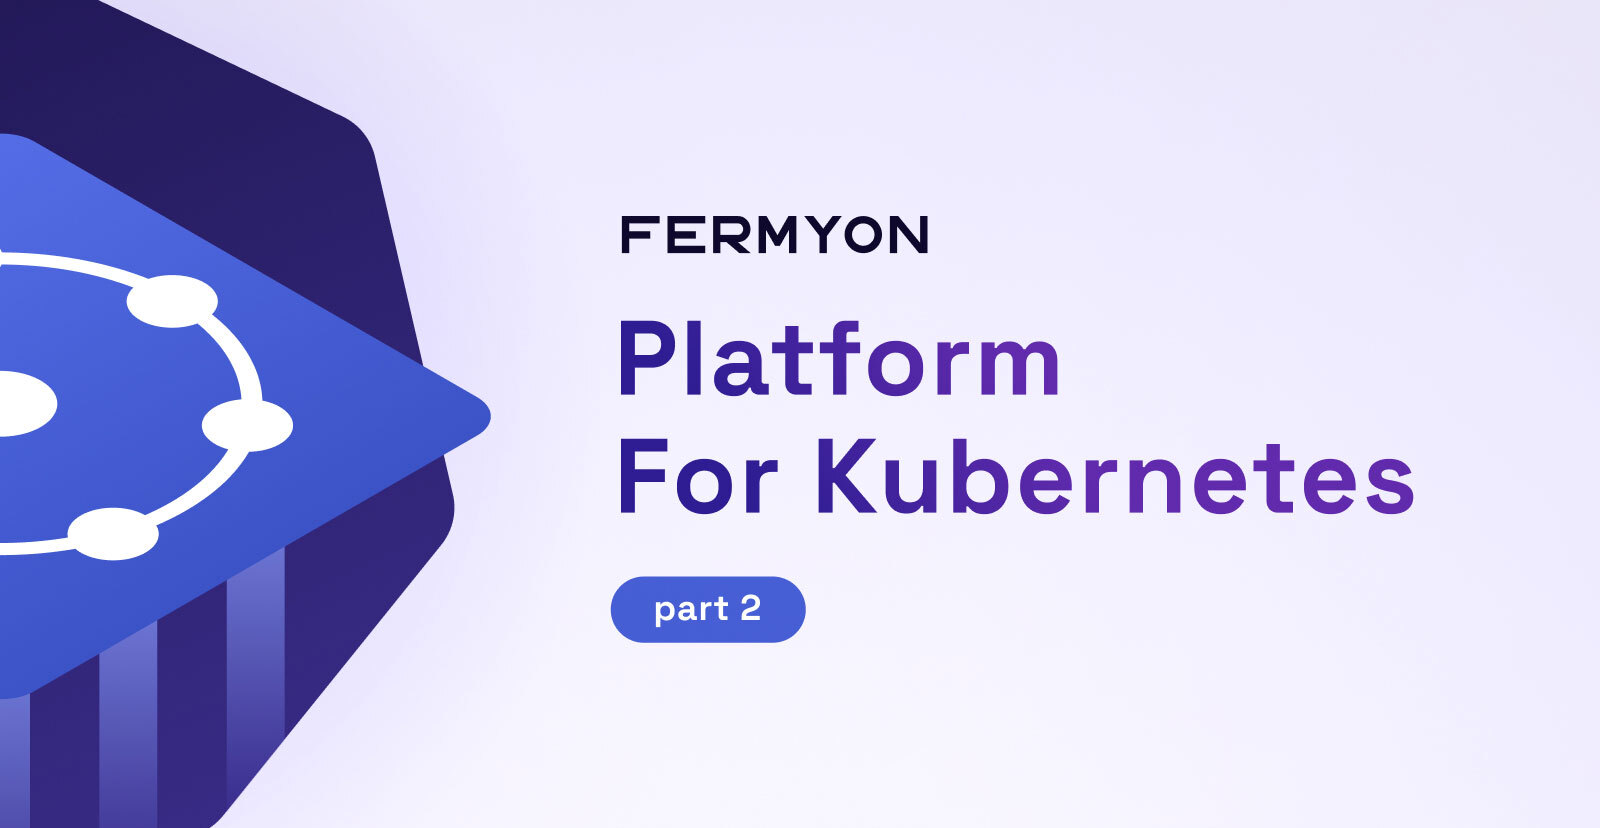 Fermyon Platform For Kubernetes Part 2: Enterprise Architectures and Patterns